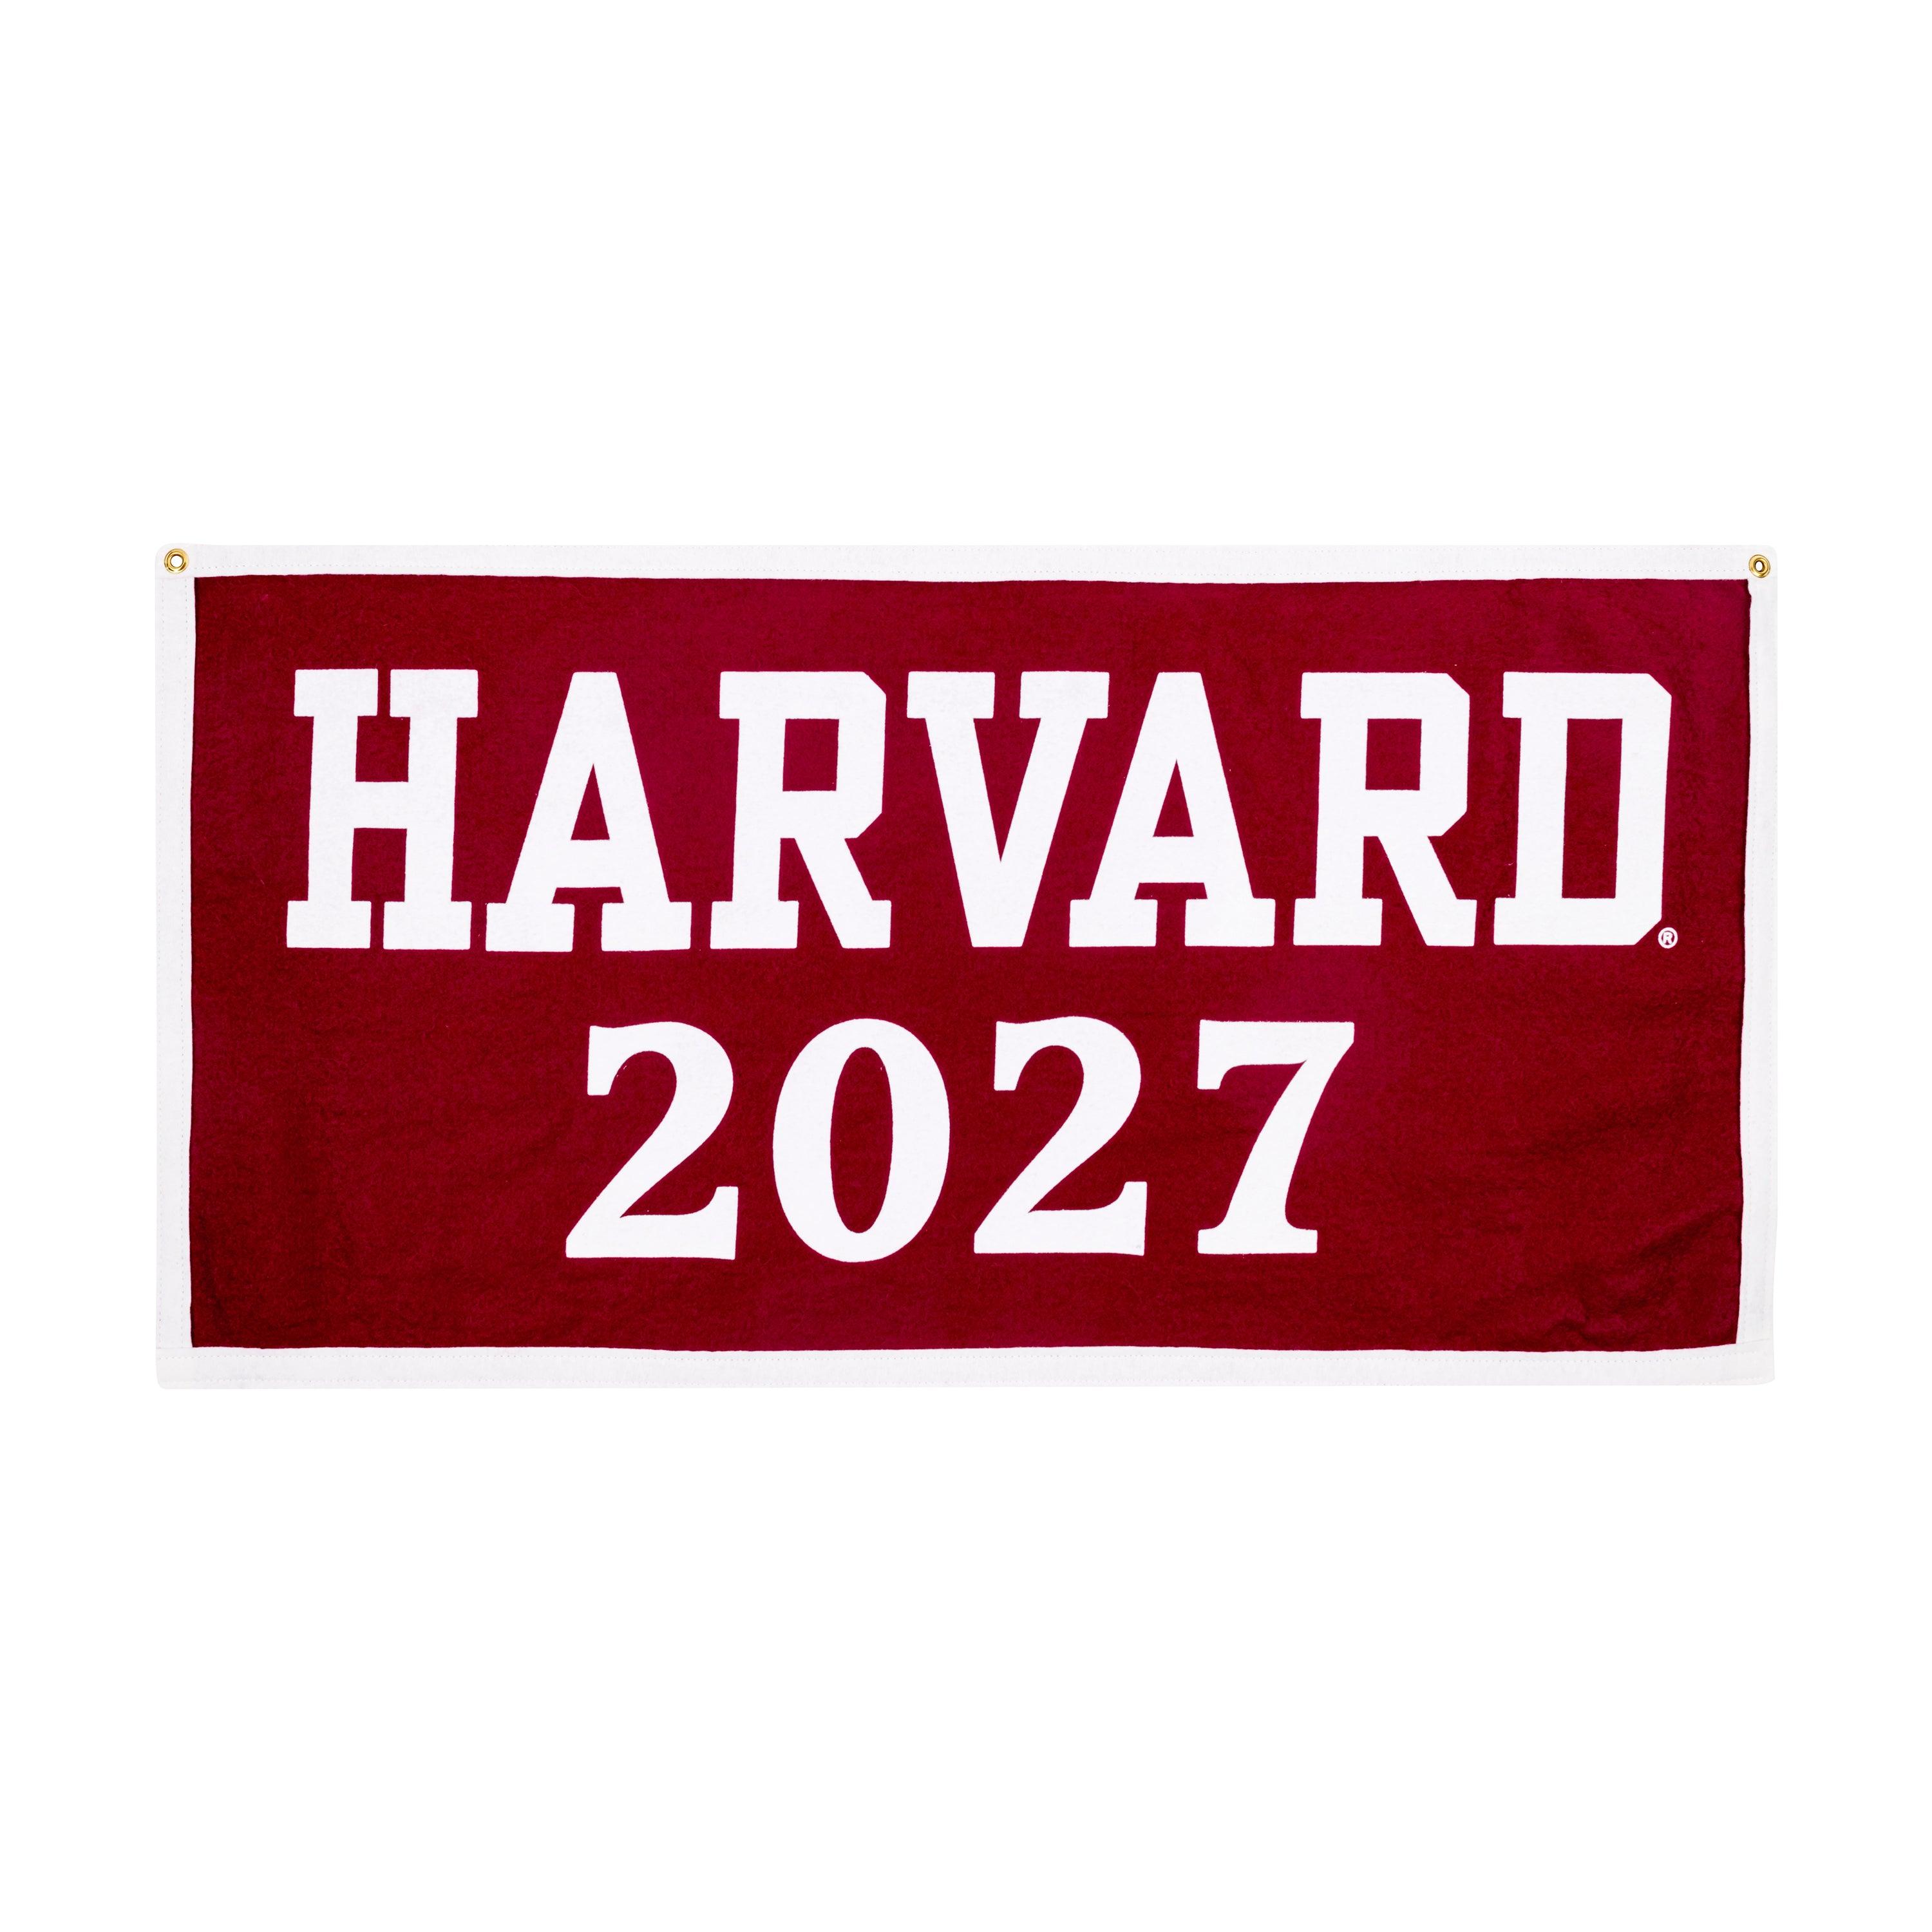 Harvard 2027 Felt Banner